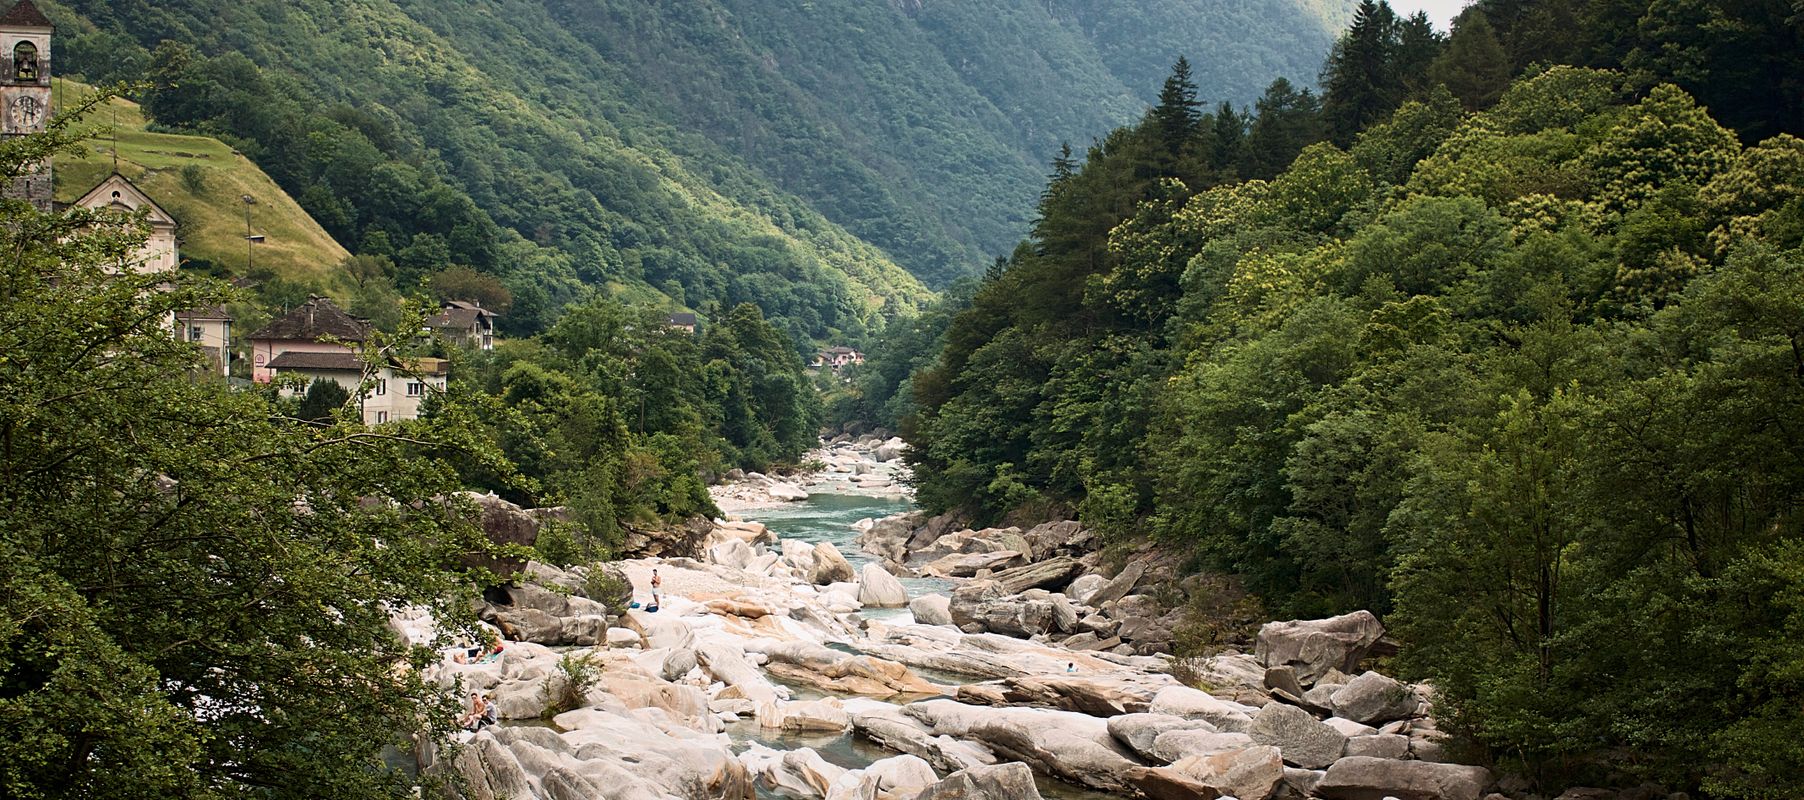 Landscape of the river